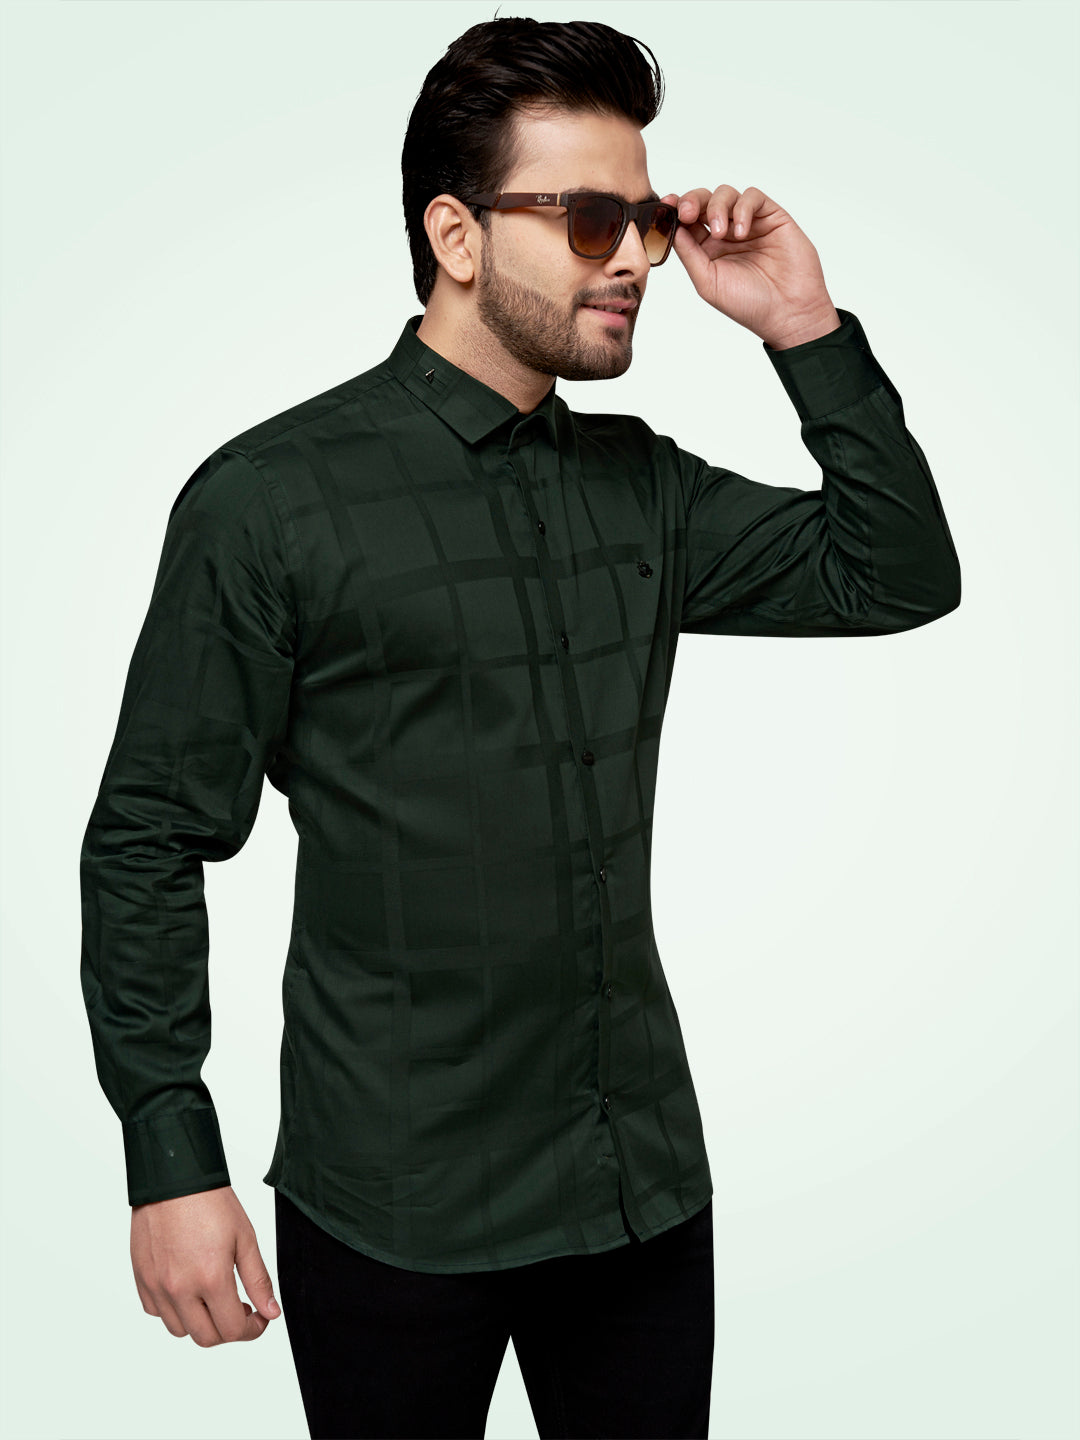 Black and White Self Checks Cocktail Shirt- Premium 60s CountsSelf Checks Cocktail Shirt- Premium 60s Counts Green